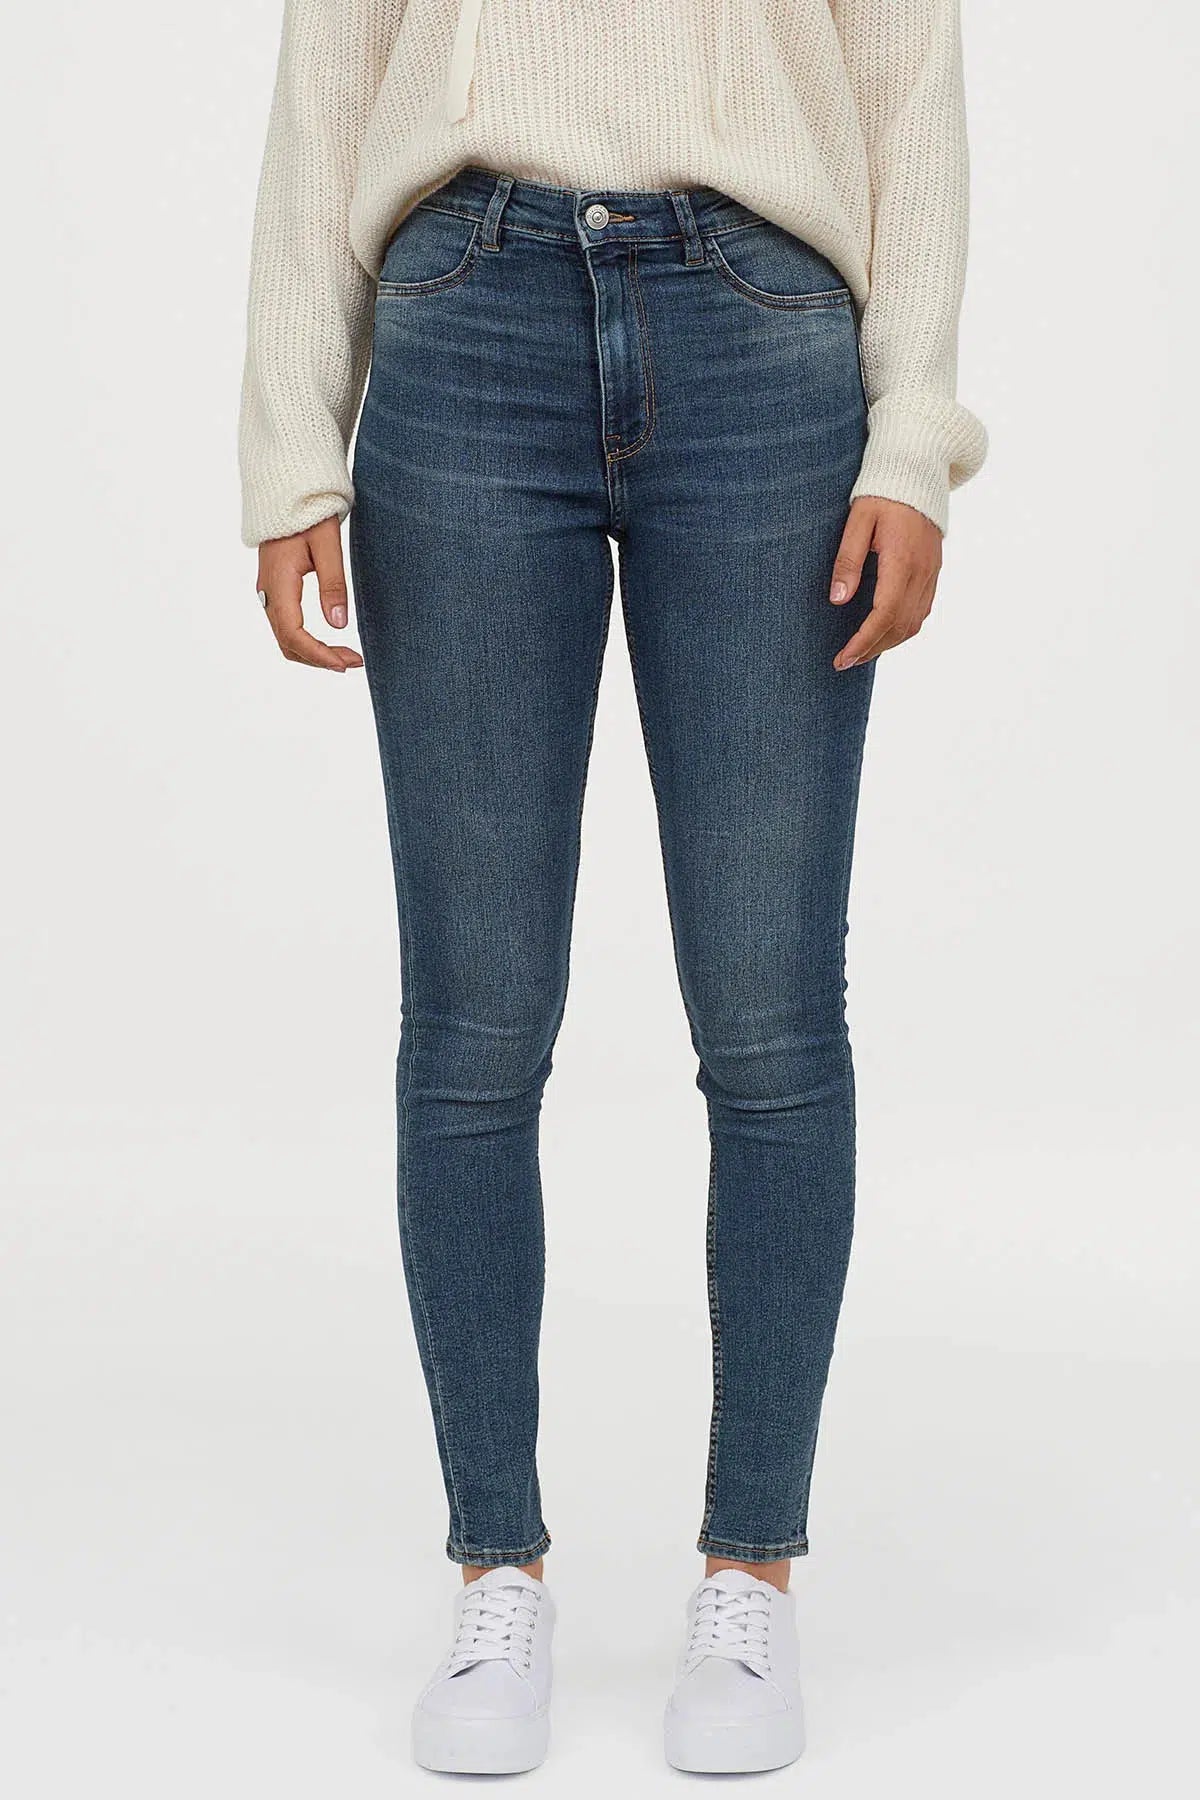 H&M Super Skinny Jeans Indigo Denim / 4